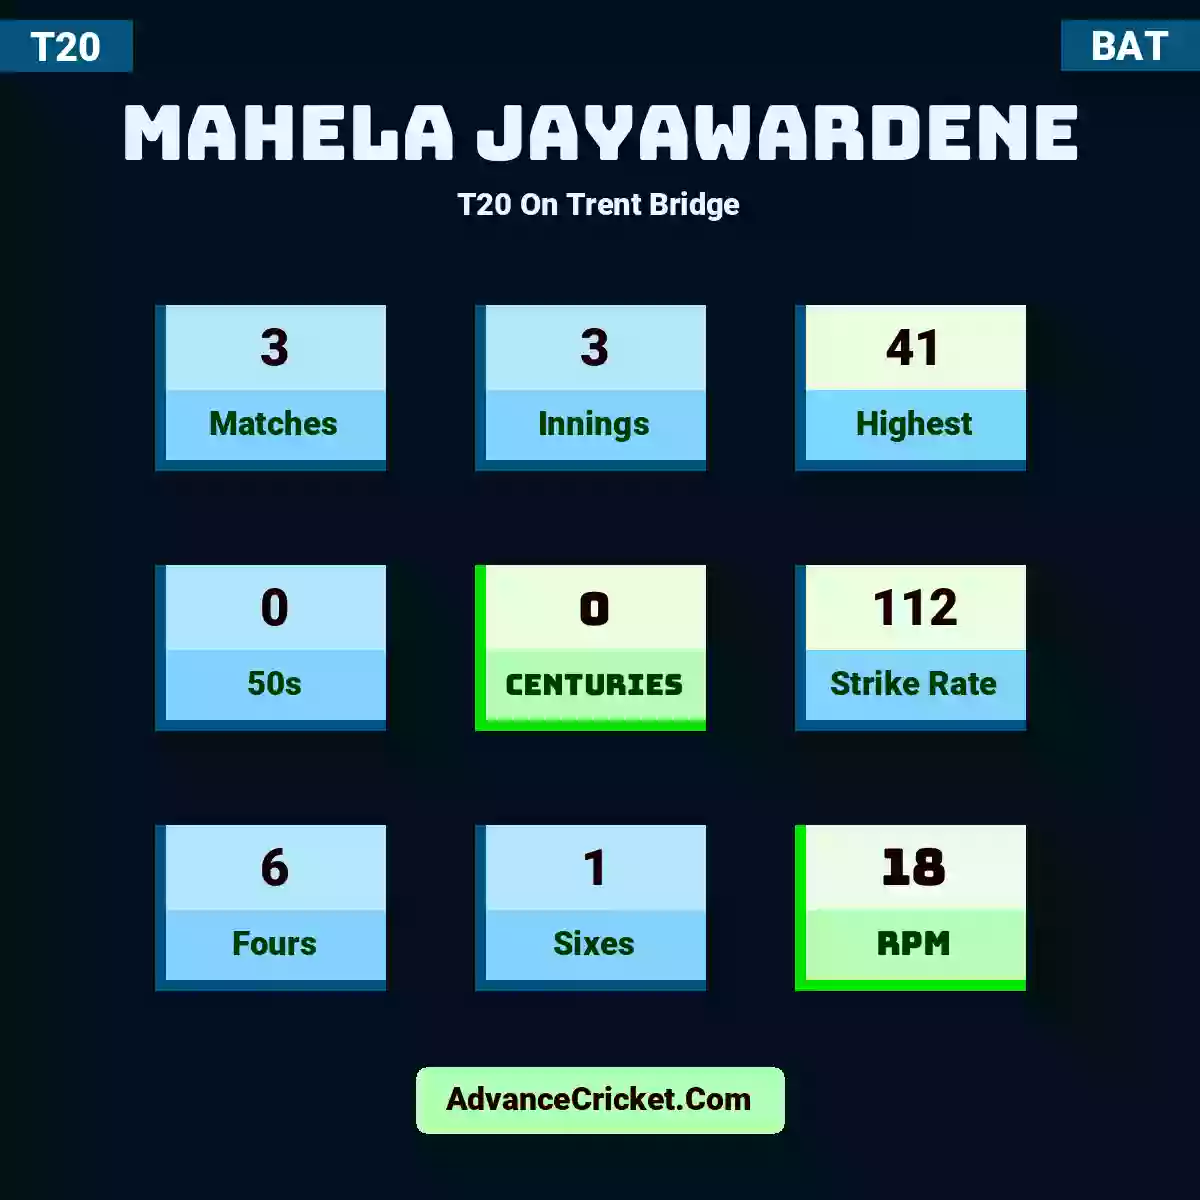 Mahela Jayawardene T20  On Trent Bridge, Mahela Jayawardene played 3 matches, scored 41 runs as highest, 0 half-centuries, and 0 centuries, with a strike rate of 112. M.Jayawardene hit 6 fours and 1 sixes, with an RPM of 18.